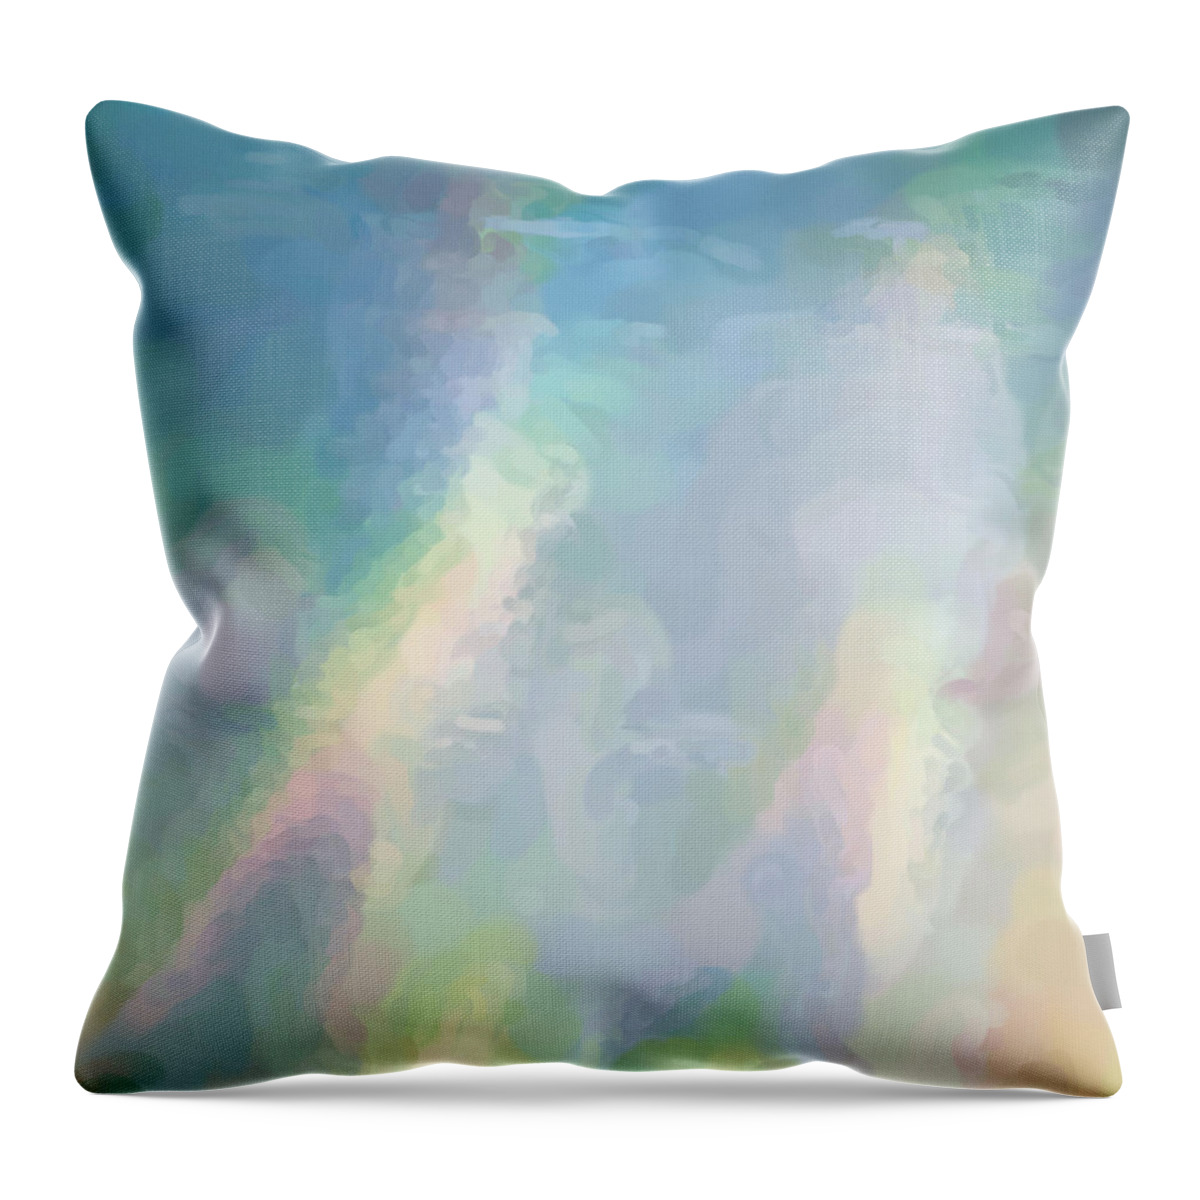 Warm Breeze Throw Pillow featuring the digital art Warm Breeze by Tom Druin